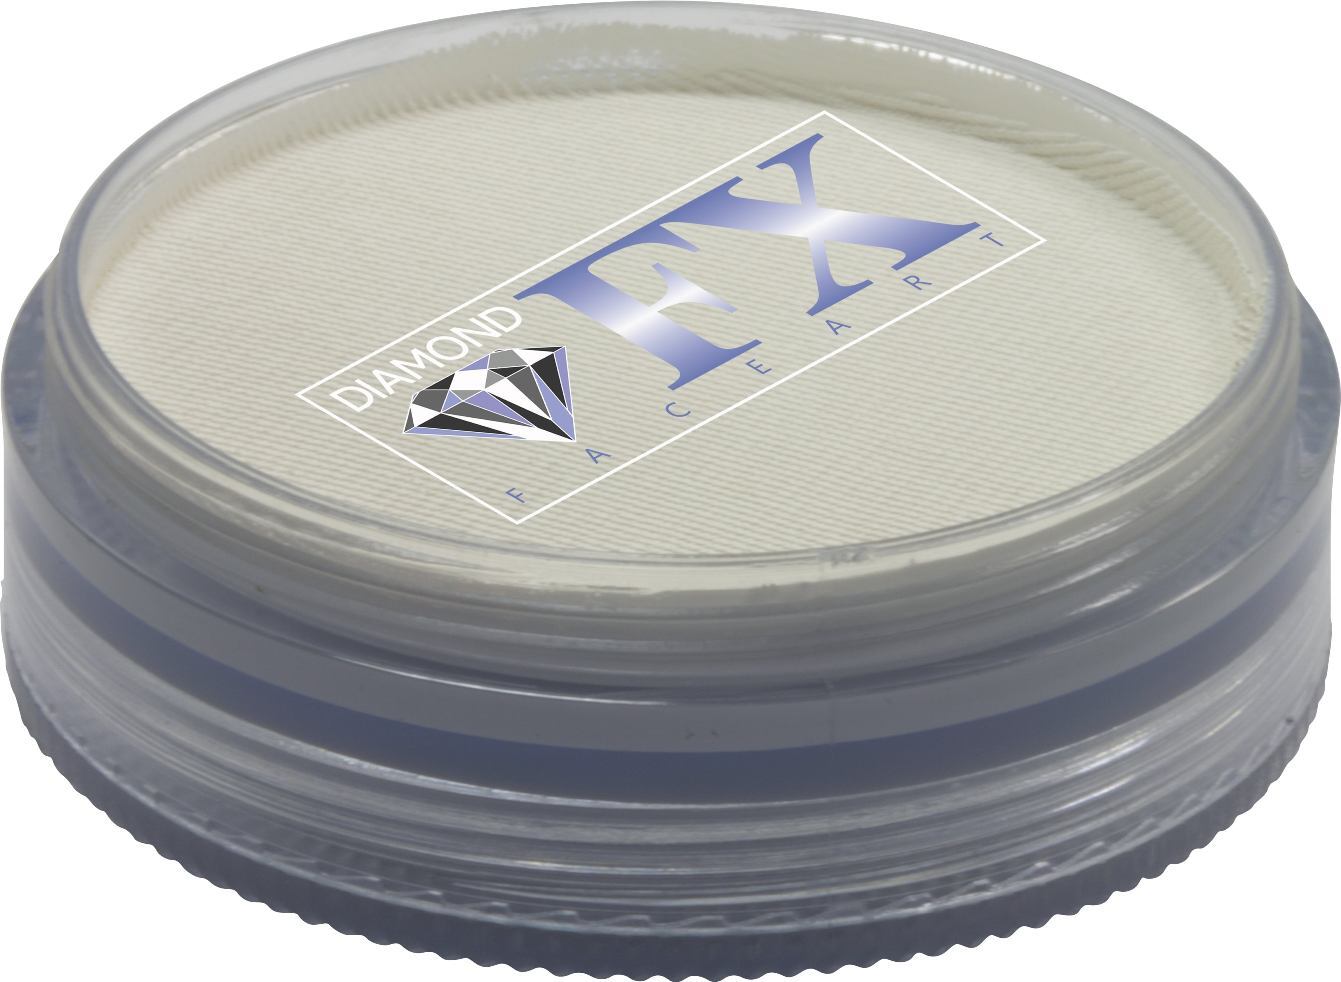 Diamond FX White 45g - Small Image